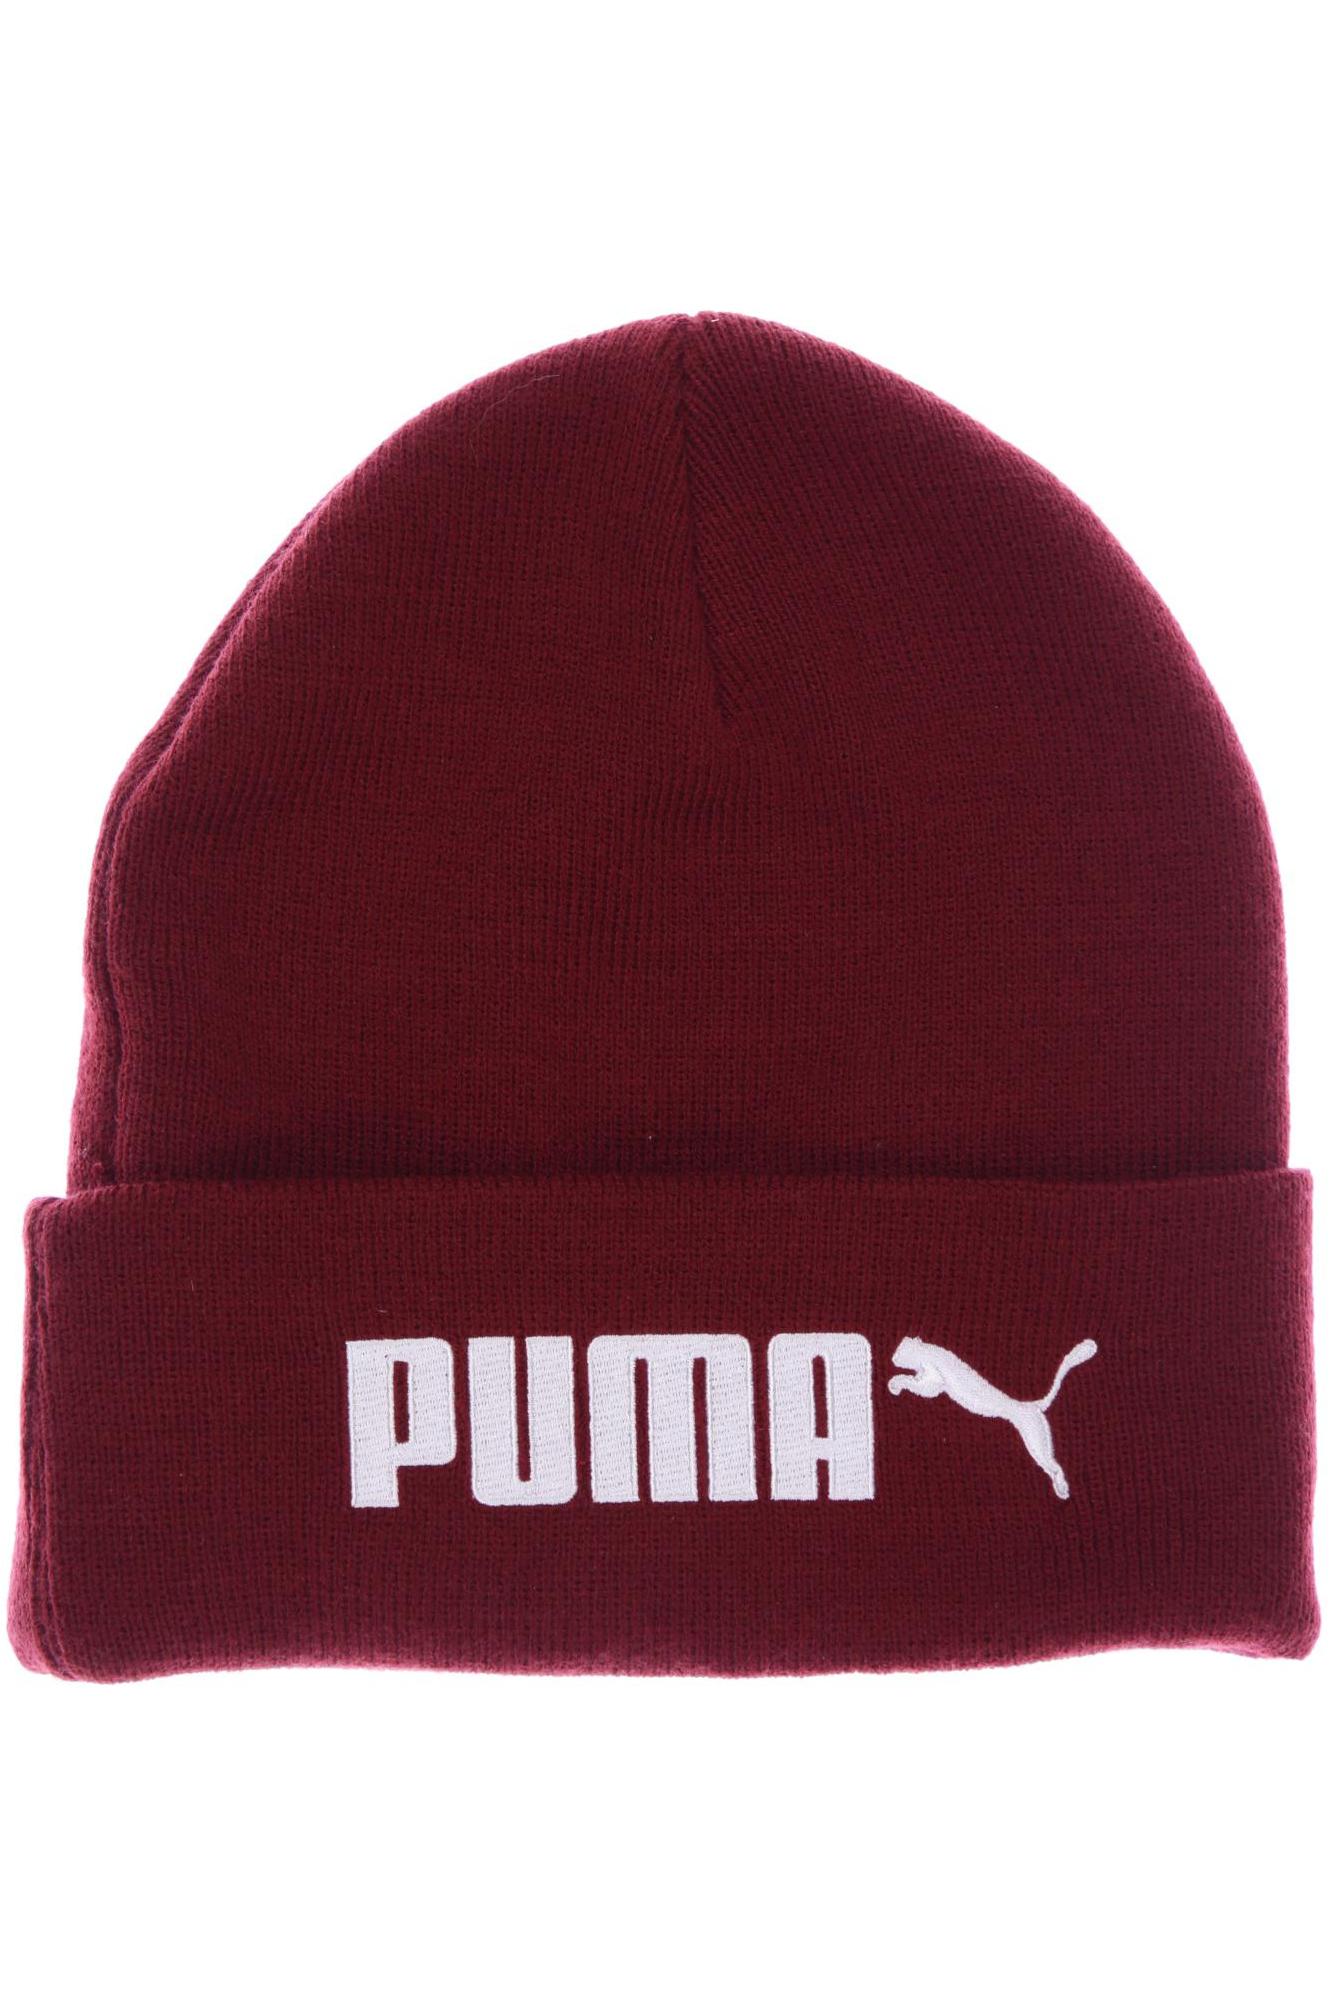 PUMA Damen Hut/Mütze, bordeaux von Puma